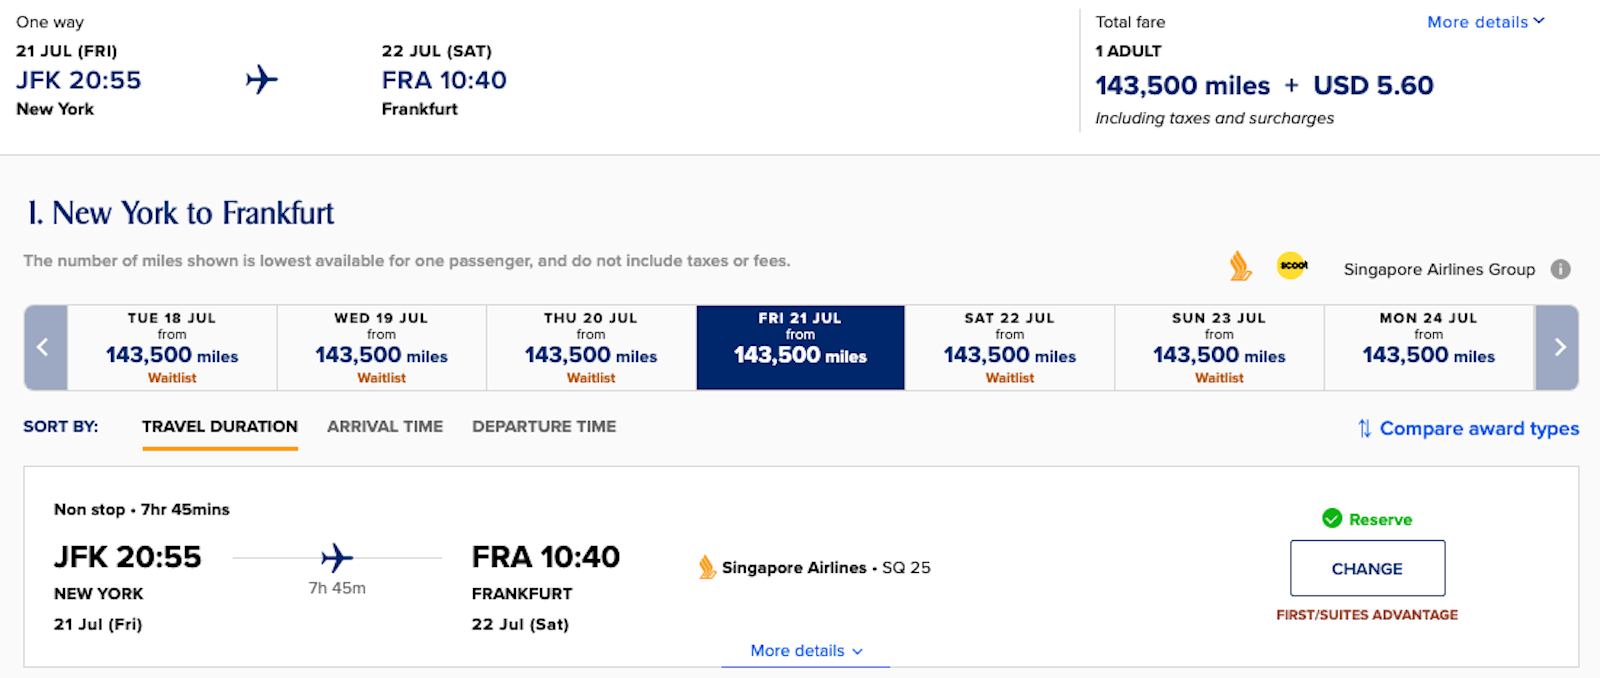 New York to Frankfurt flight details